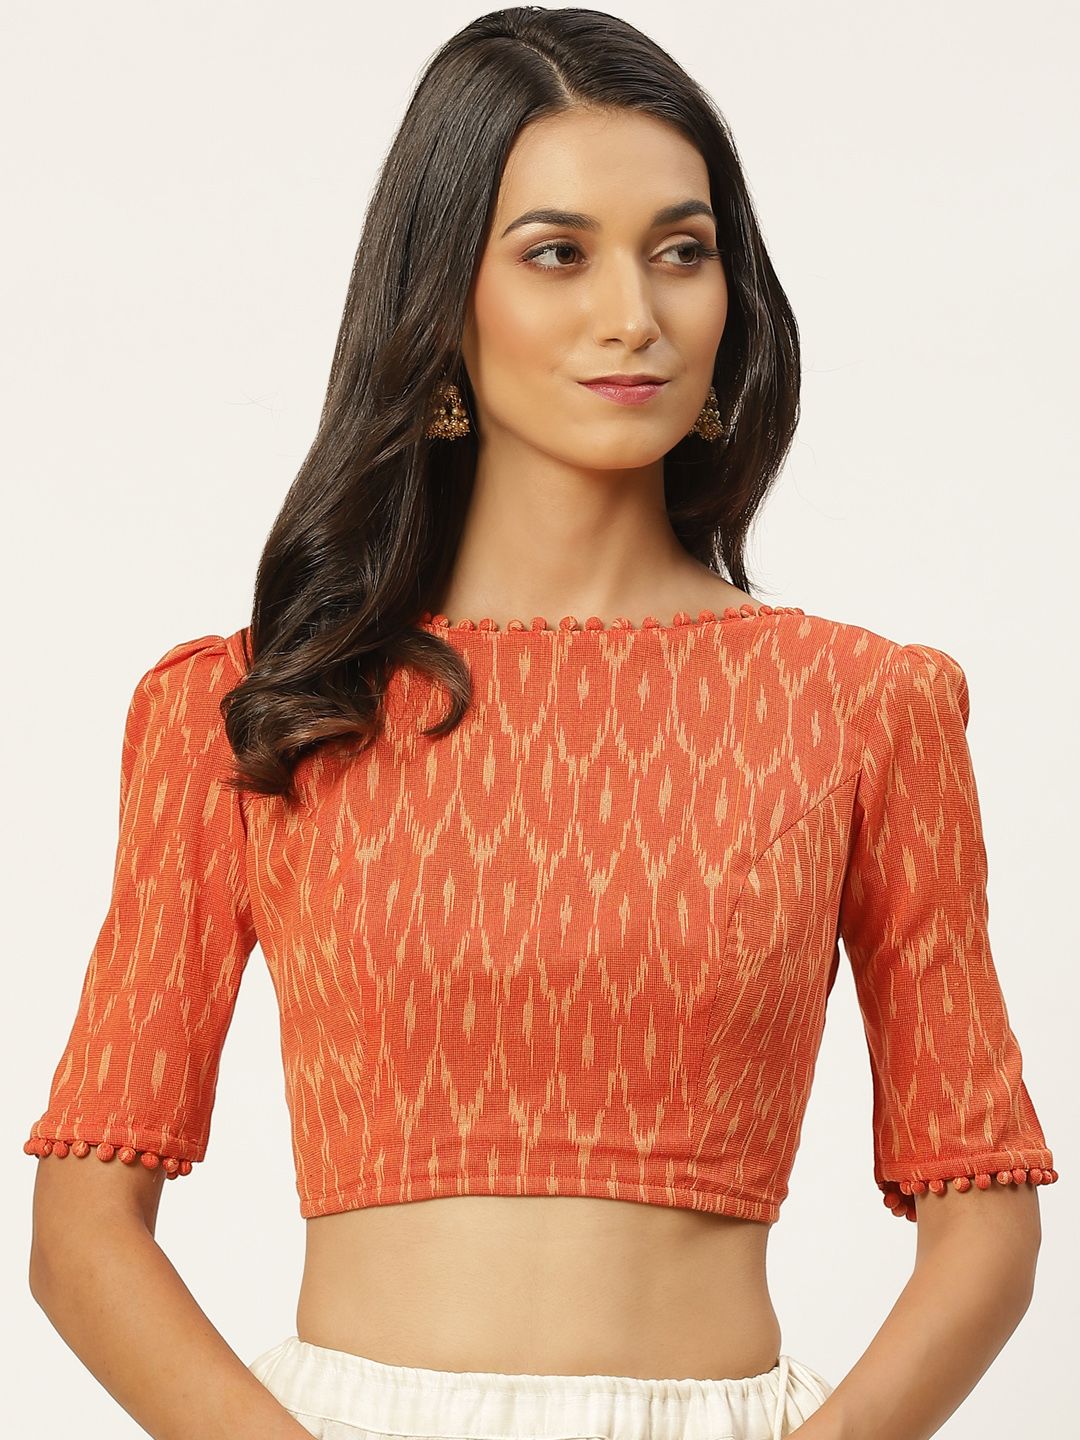 Studio Shringaar Women Orange Ikat Printed Pure Cotton Saree Blouse With Pom Pom Details Price in India